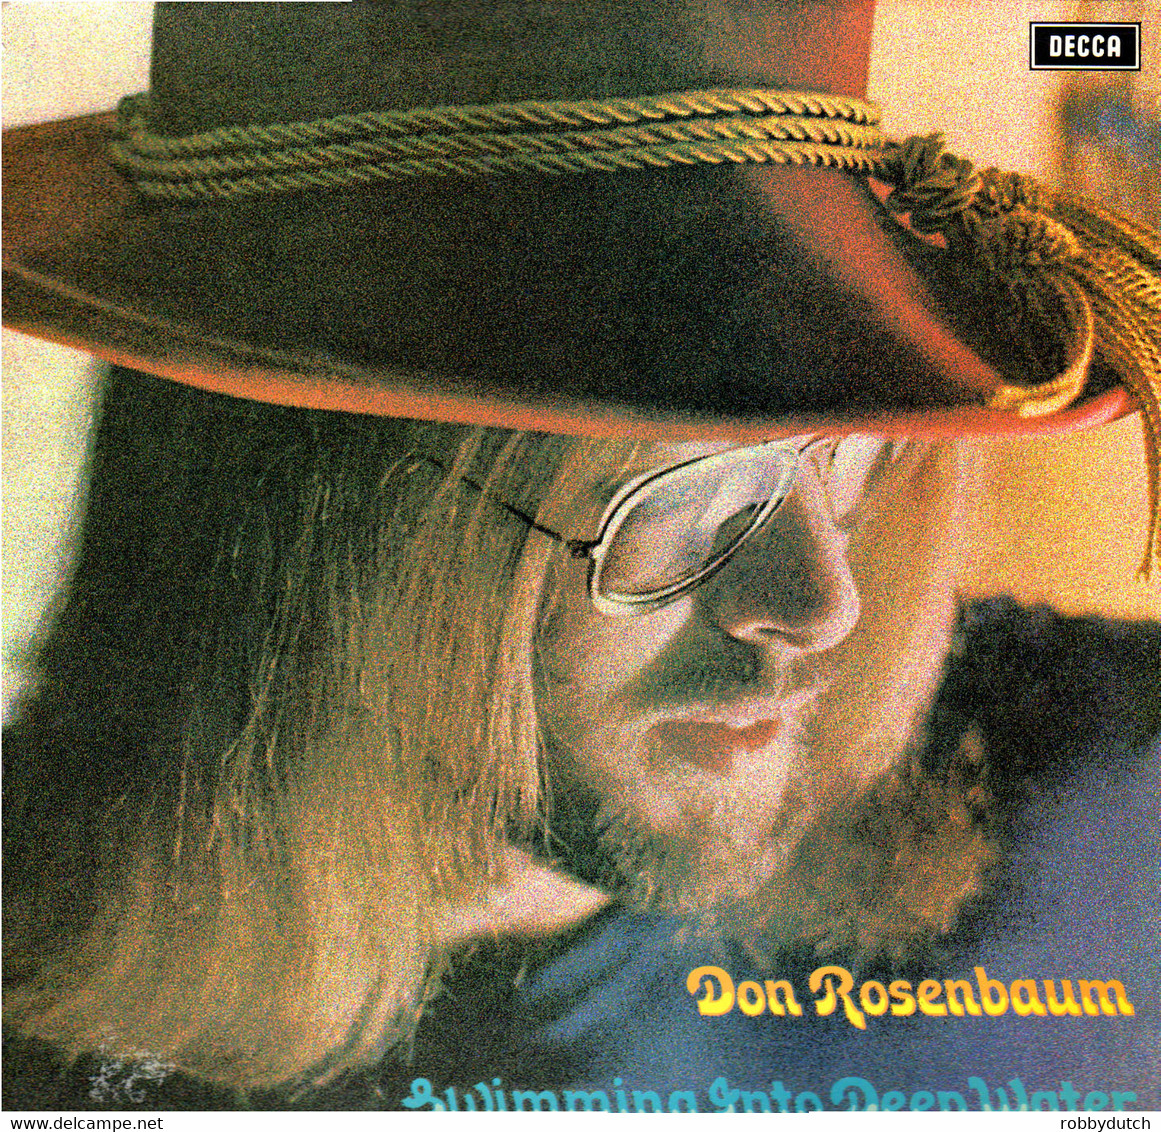 * LP * DON ROSENBAUM - SWIMMING INTO DEEP WATER (Holland 1972 EX-) - Country Et Folk